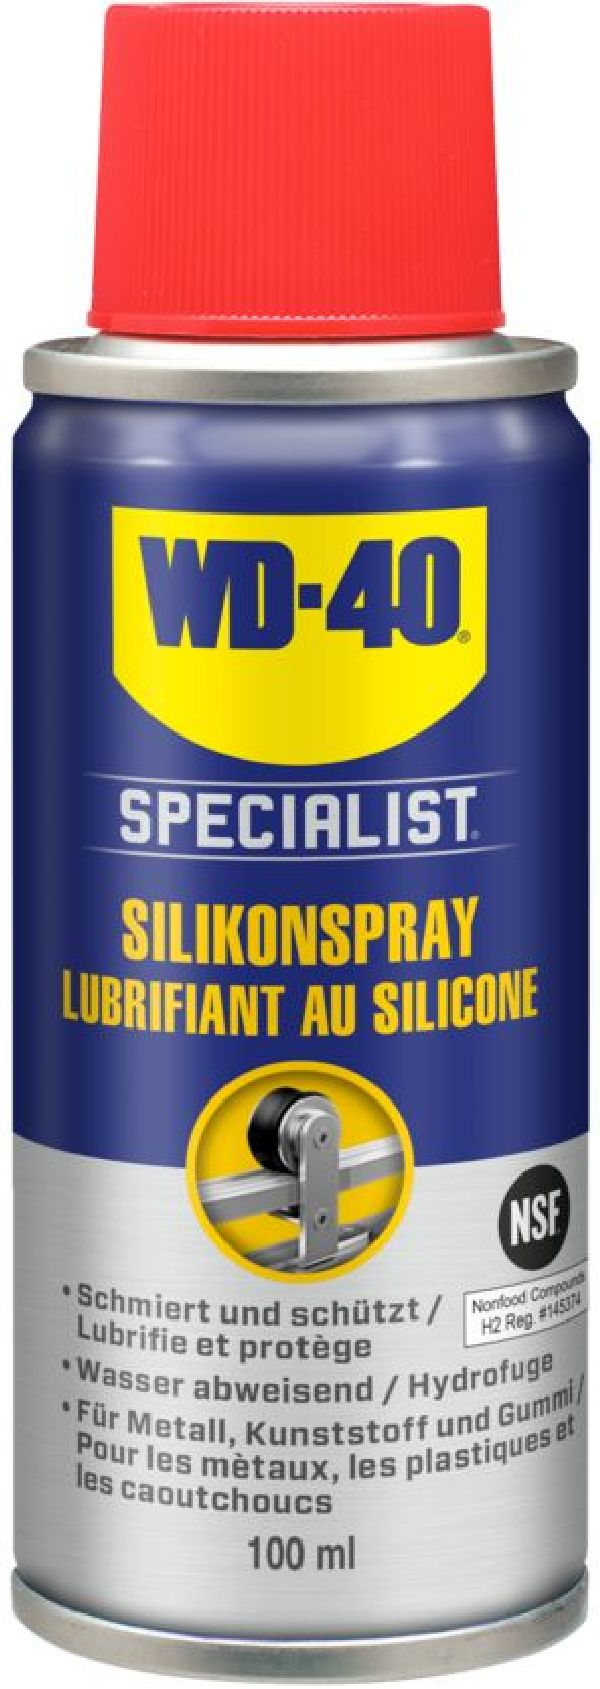 WD-40 Specialist Lubrifiant au Silicone Bombe arosol 100 ml